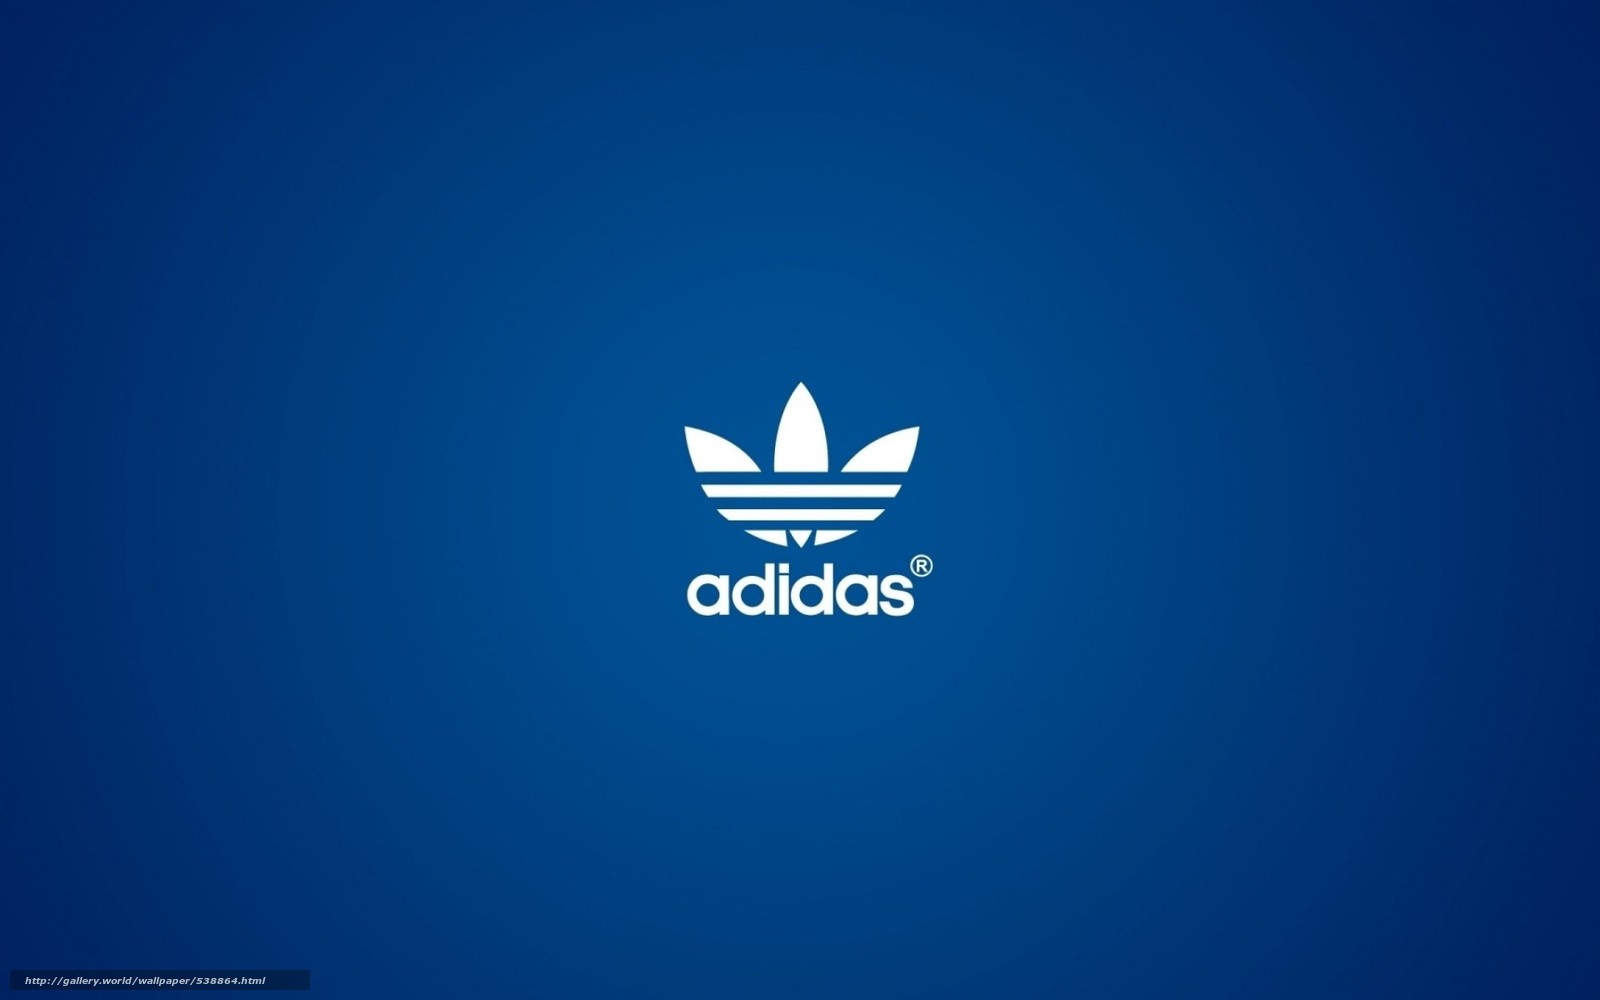 Wallpaper Adidas Originals Brand Desktop In